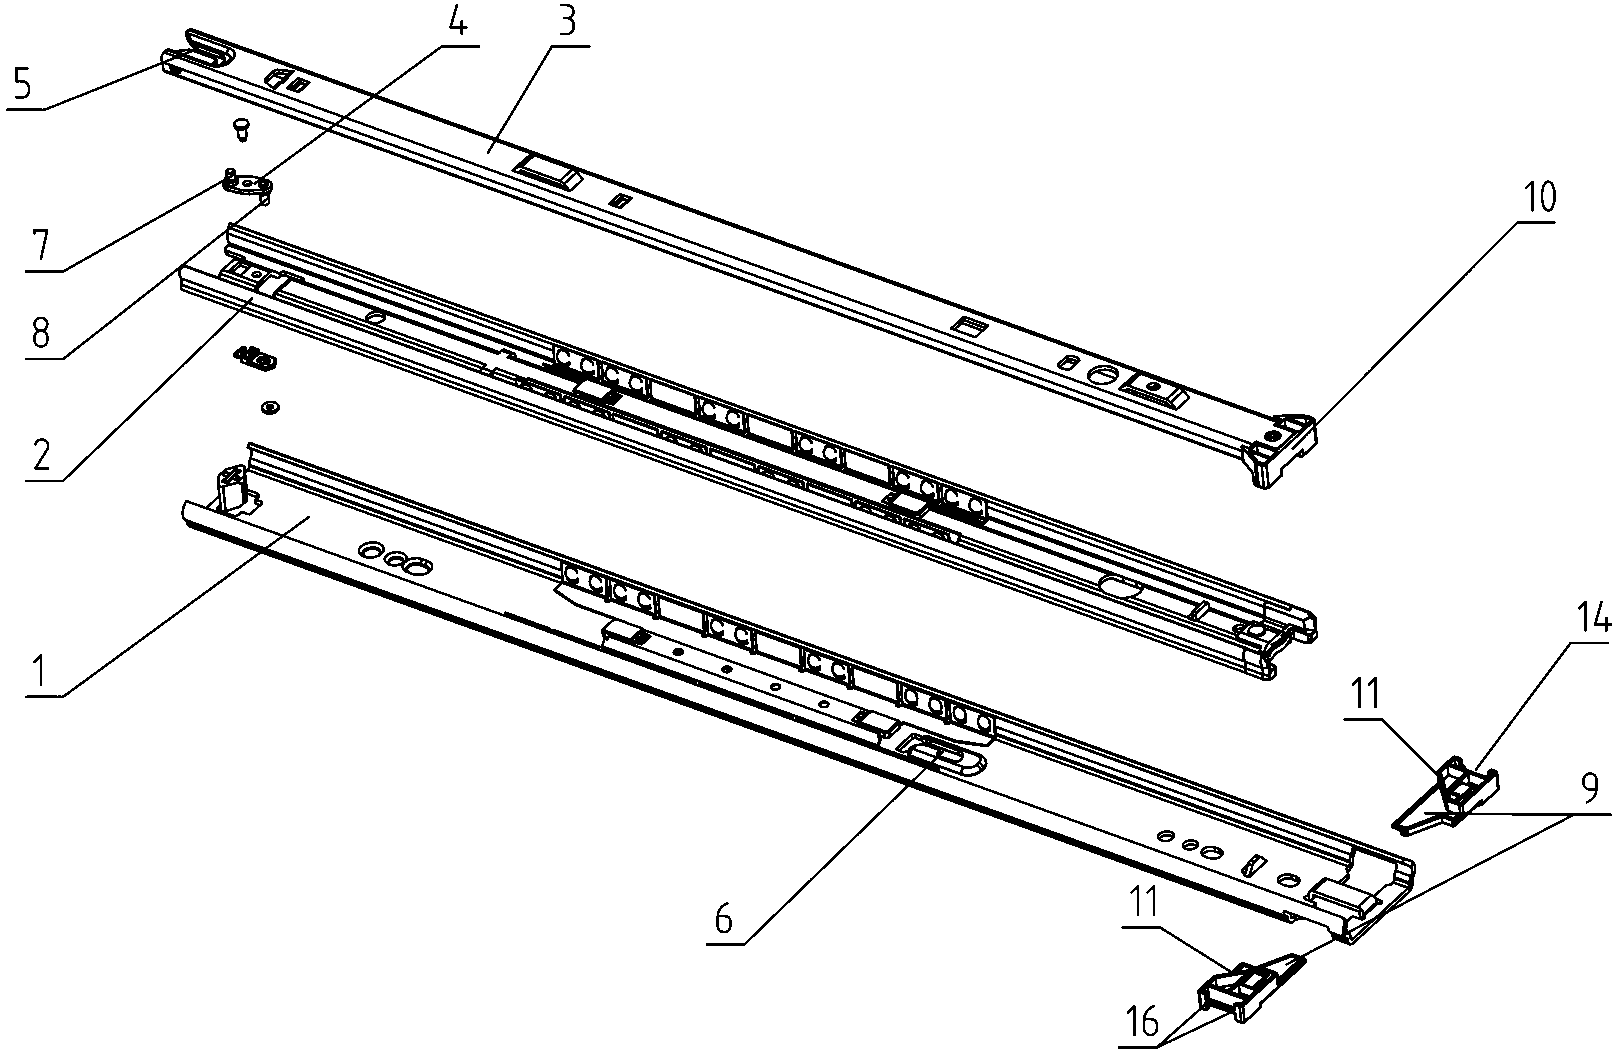 Interlocked three-section sliding rail